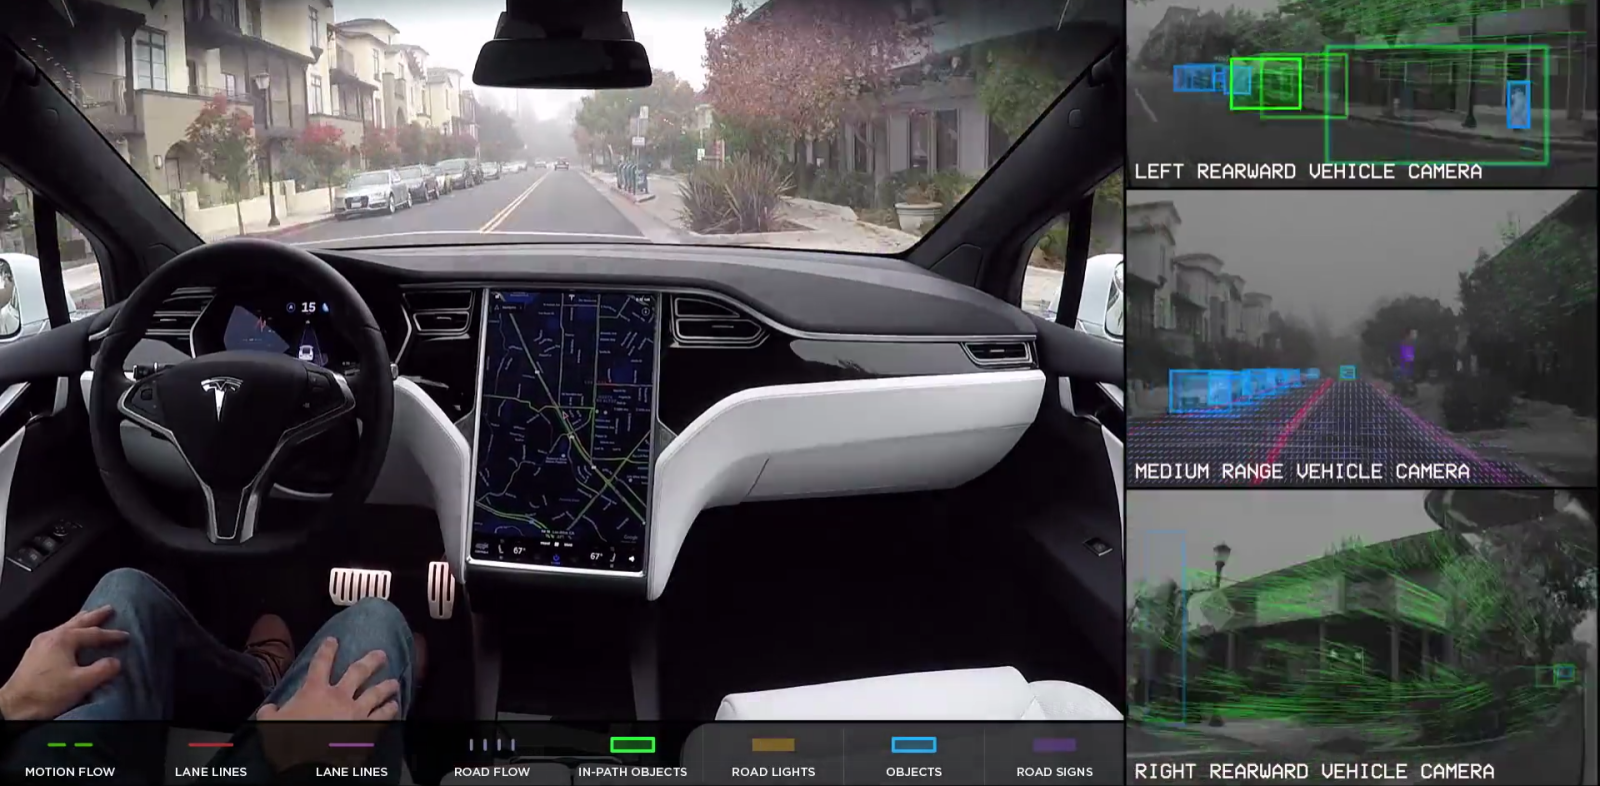 Tesla Self-driving